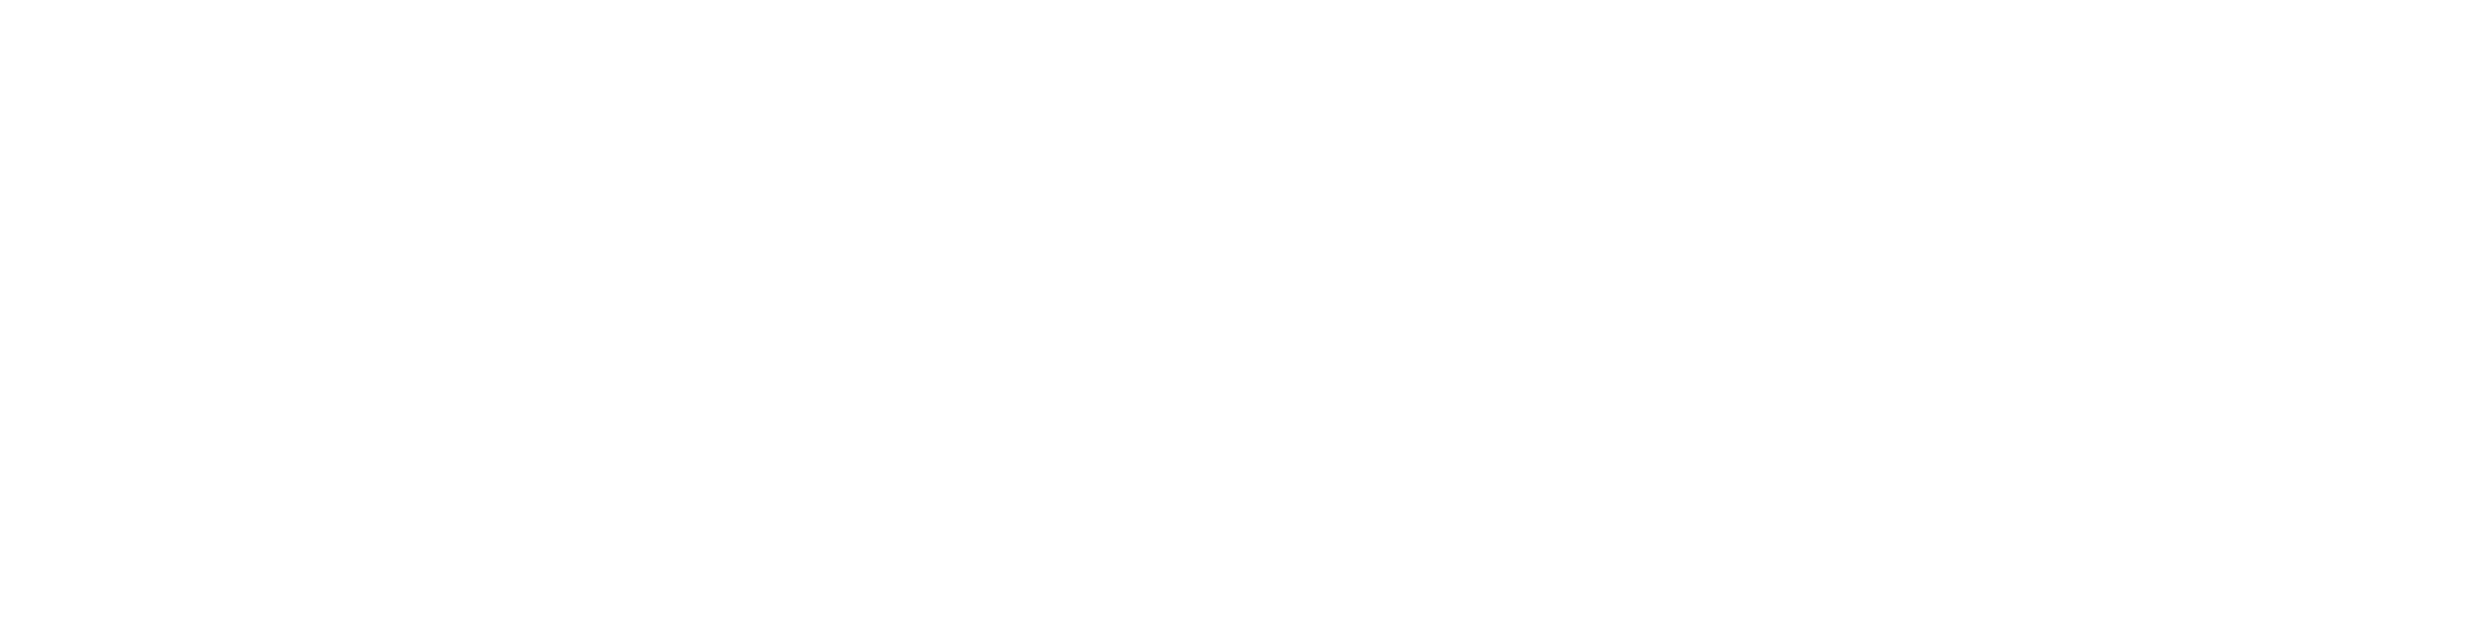 Brand: Columbia-Sportswear